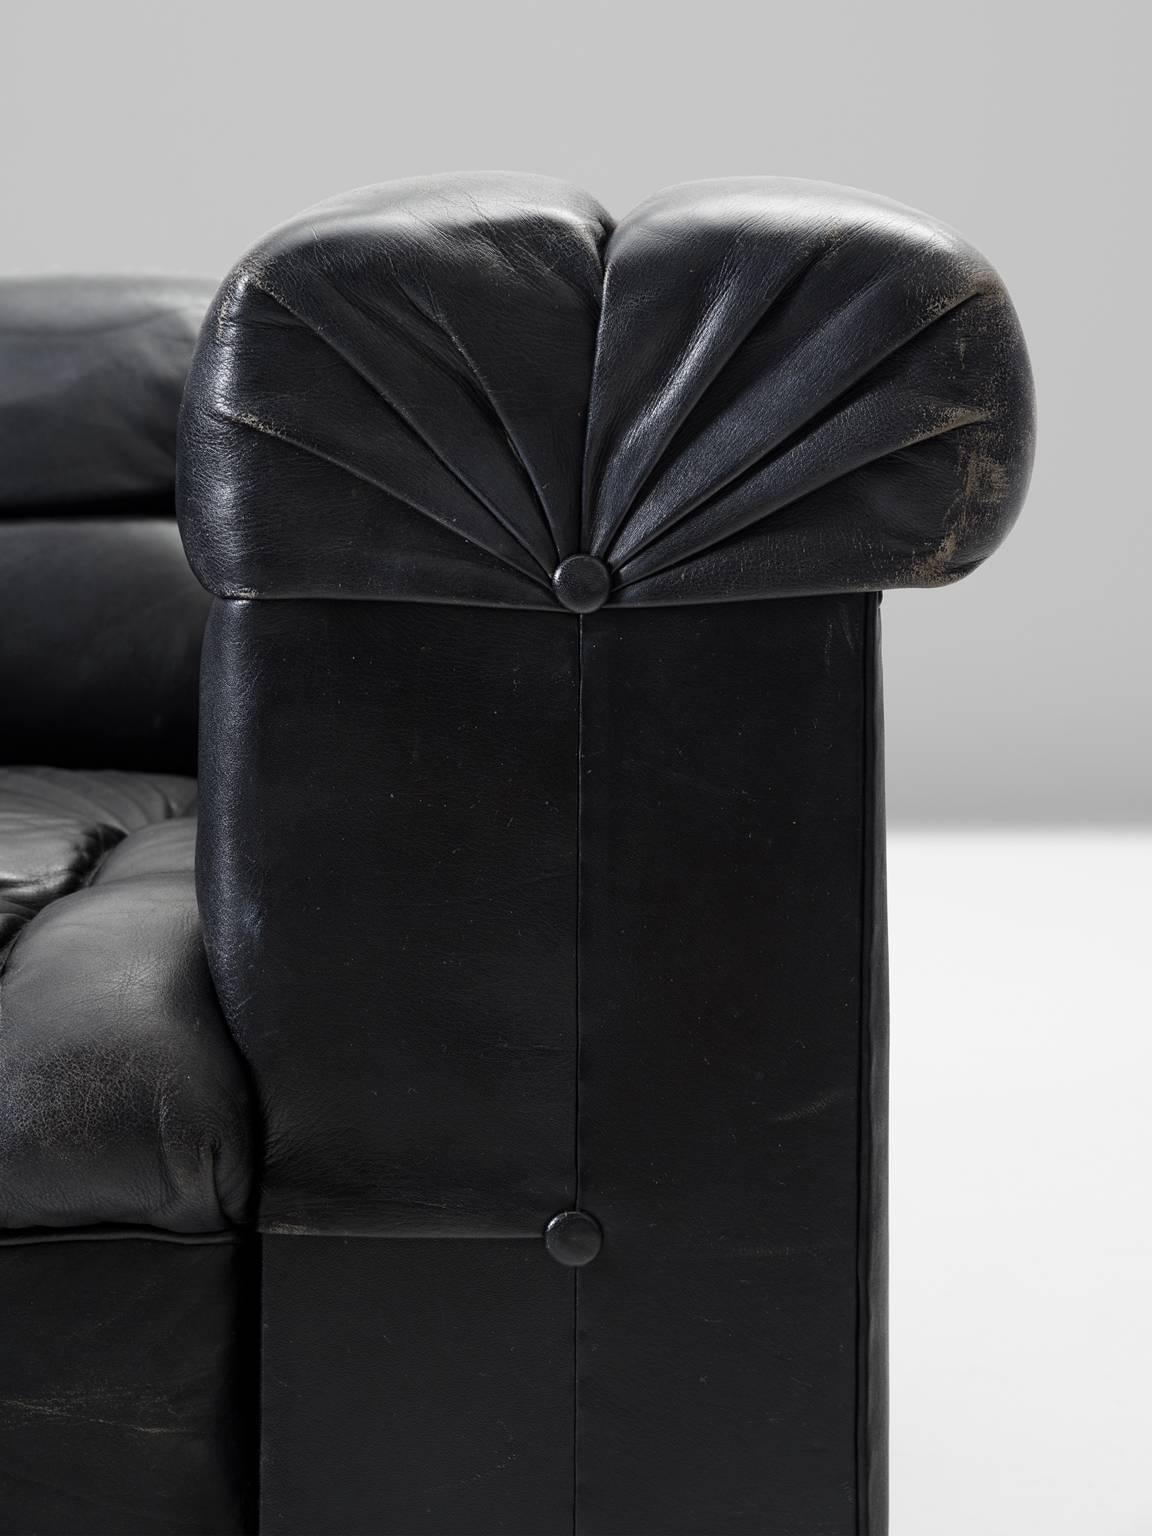 Mid-20th Century Edward Wormley Tufted Club Chair in Black Leather for Dunbar